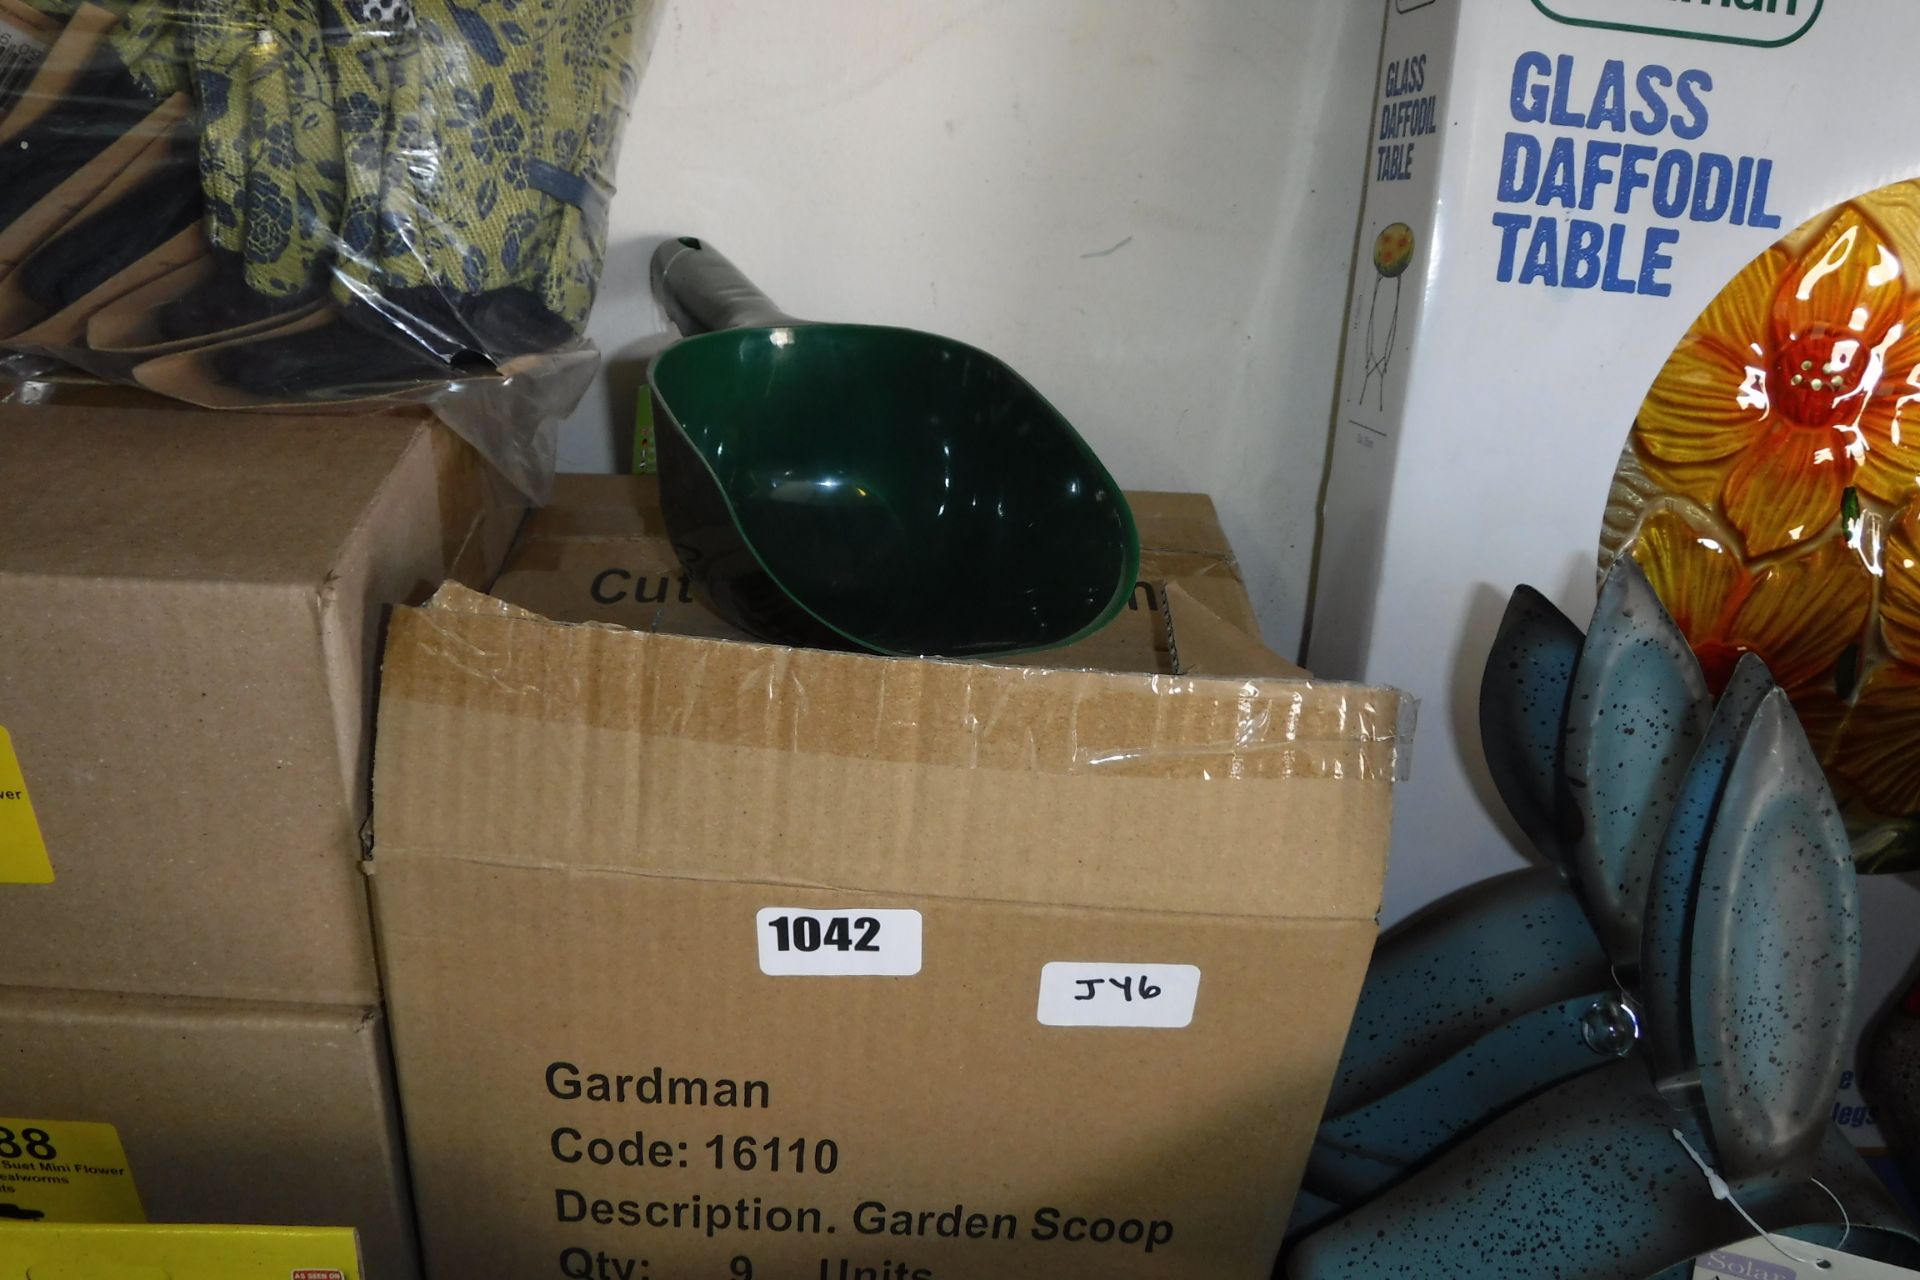 2 boxes of plastic garden scoops